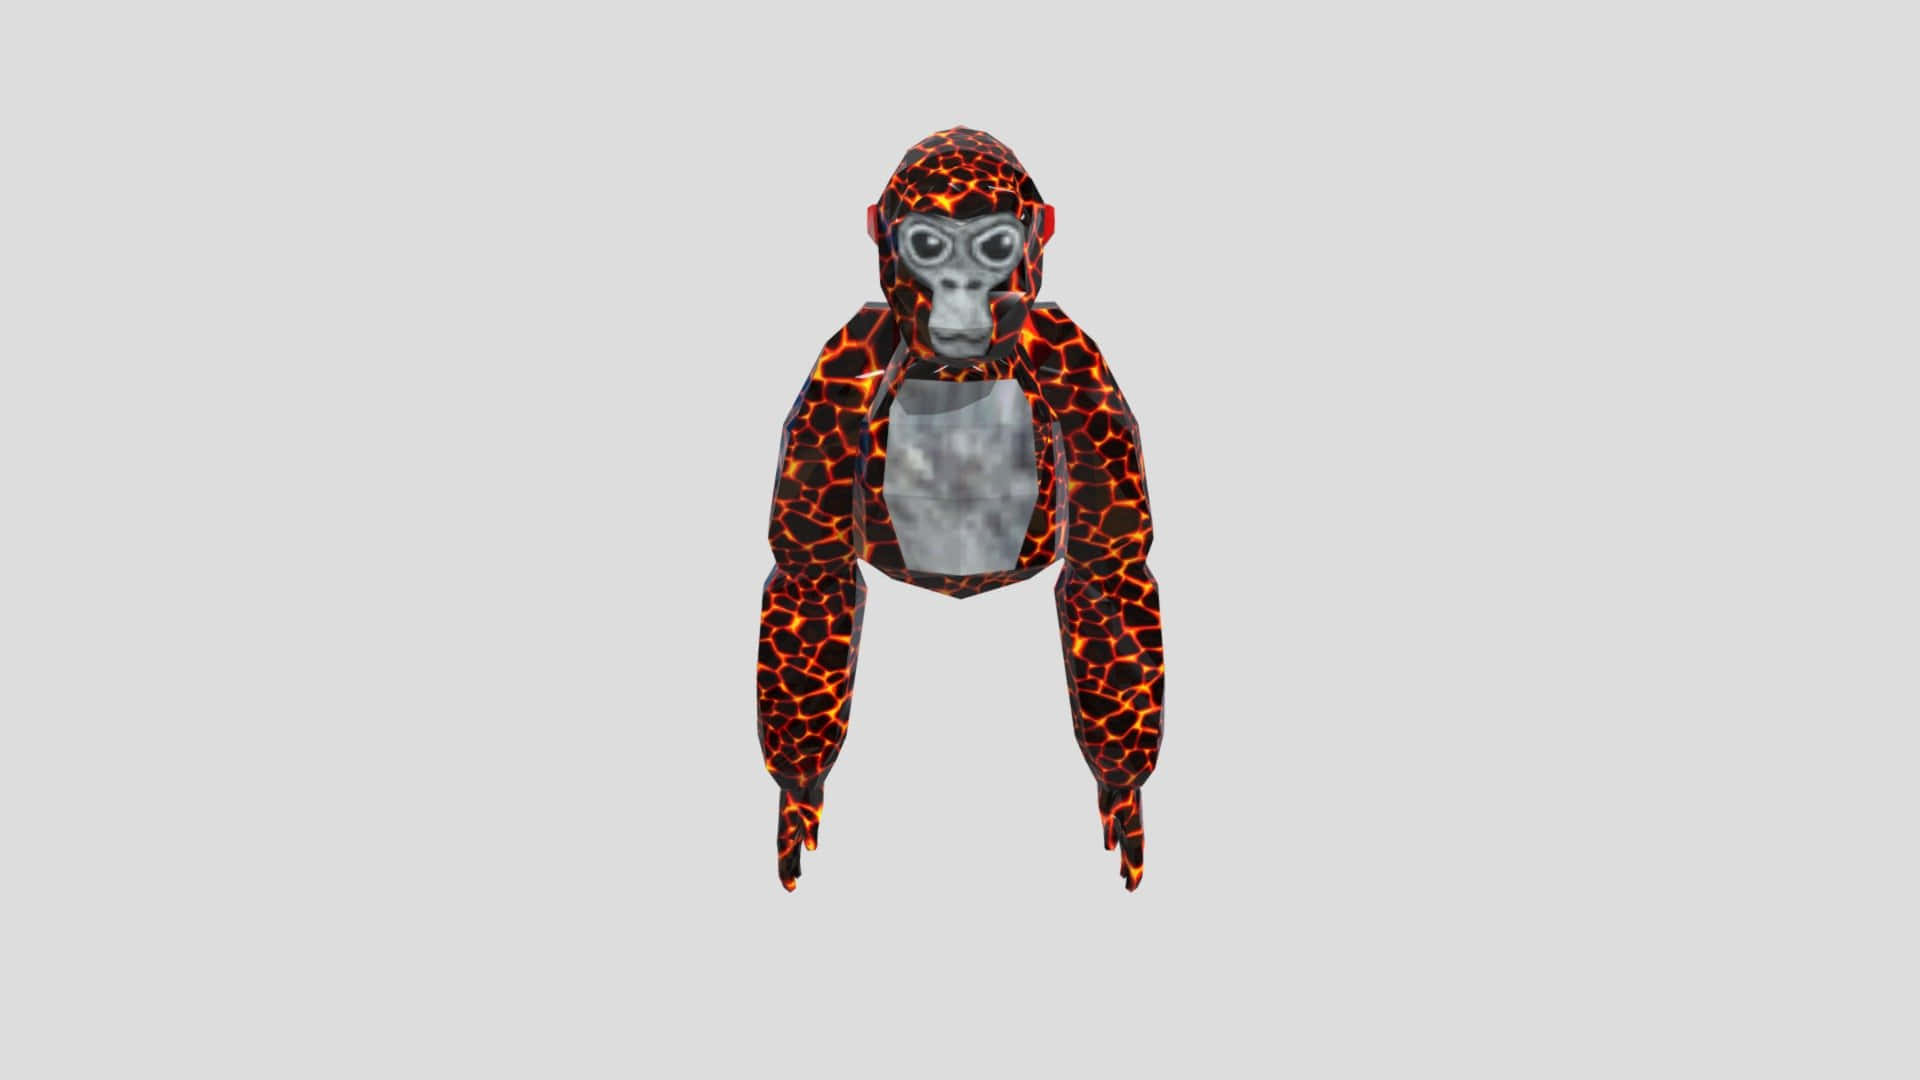 Gorillatag Modelo 3d De Estampado De Leopardo. Fondo de pantalla